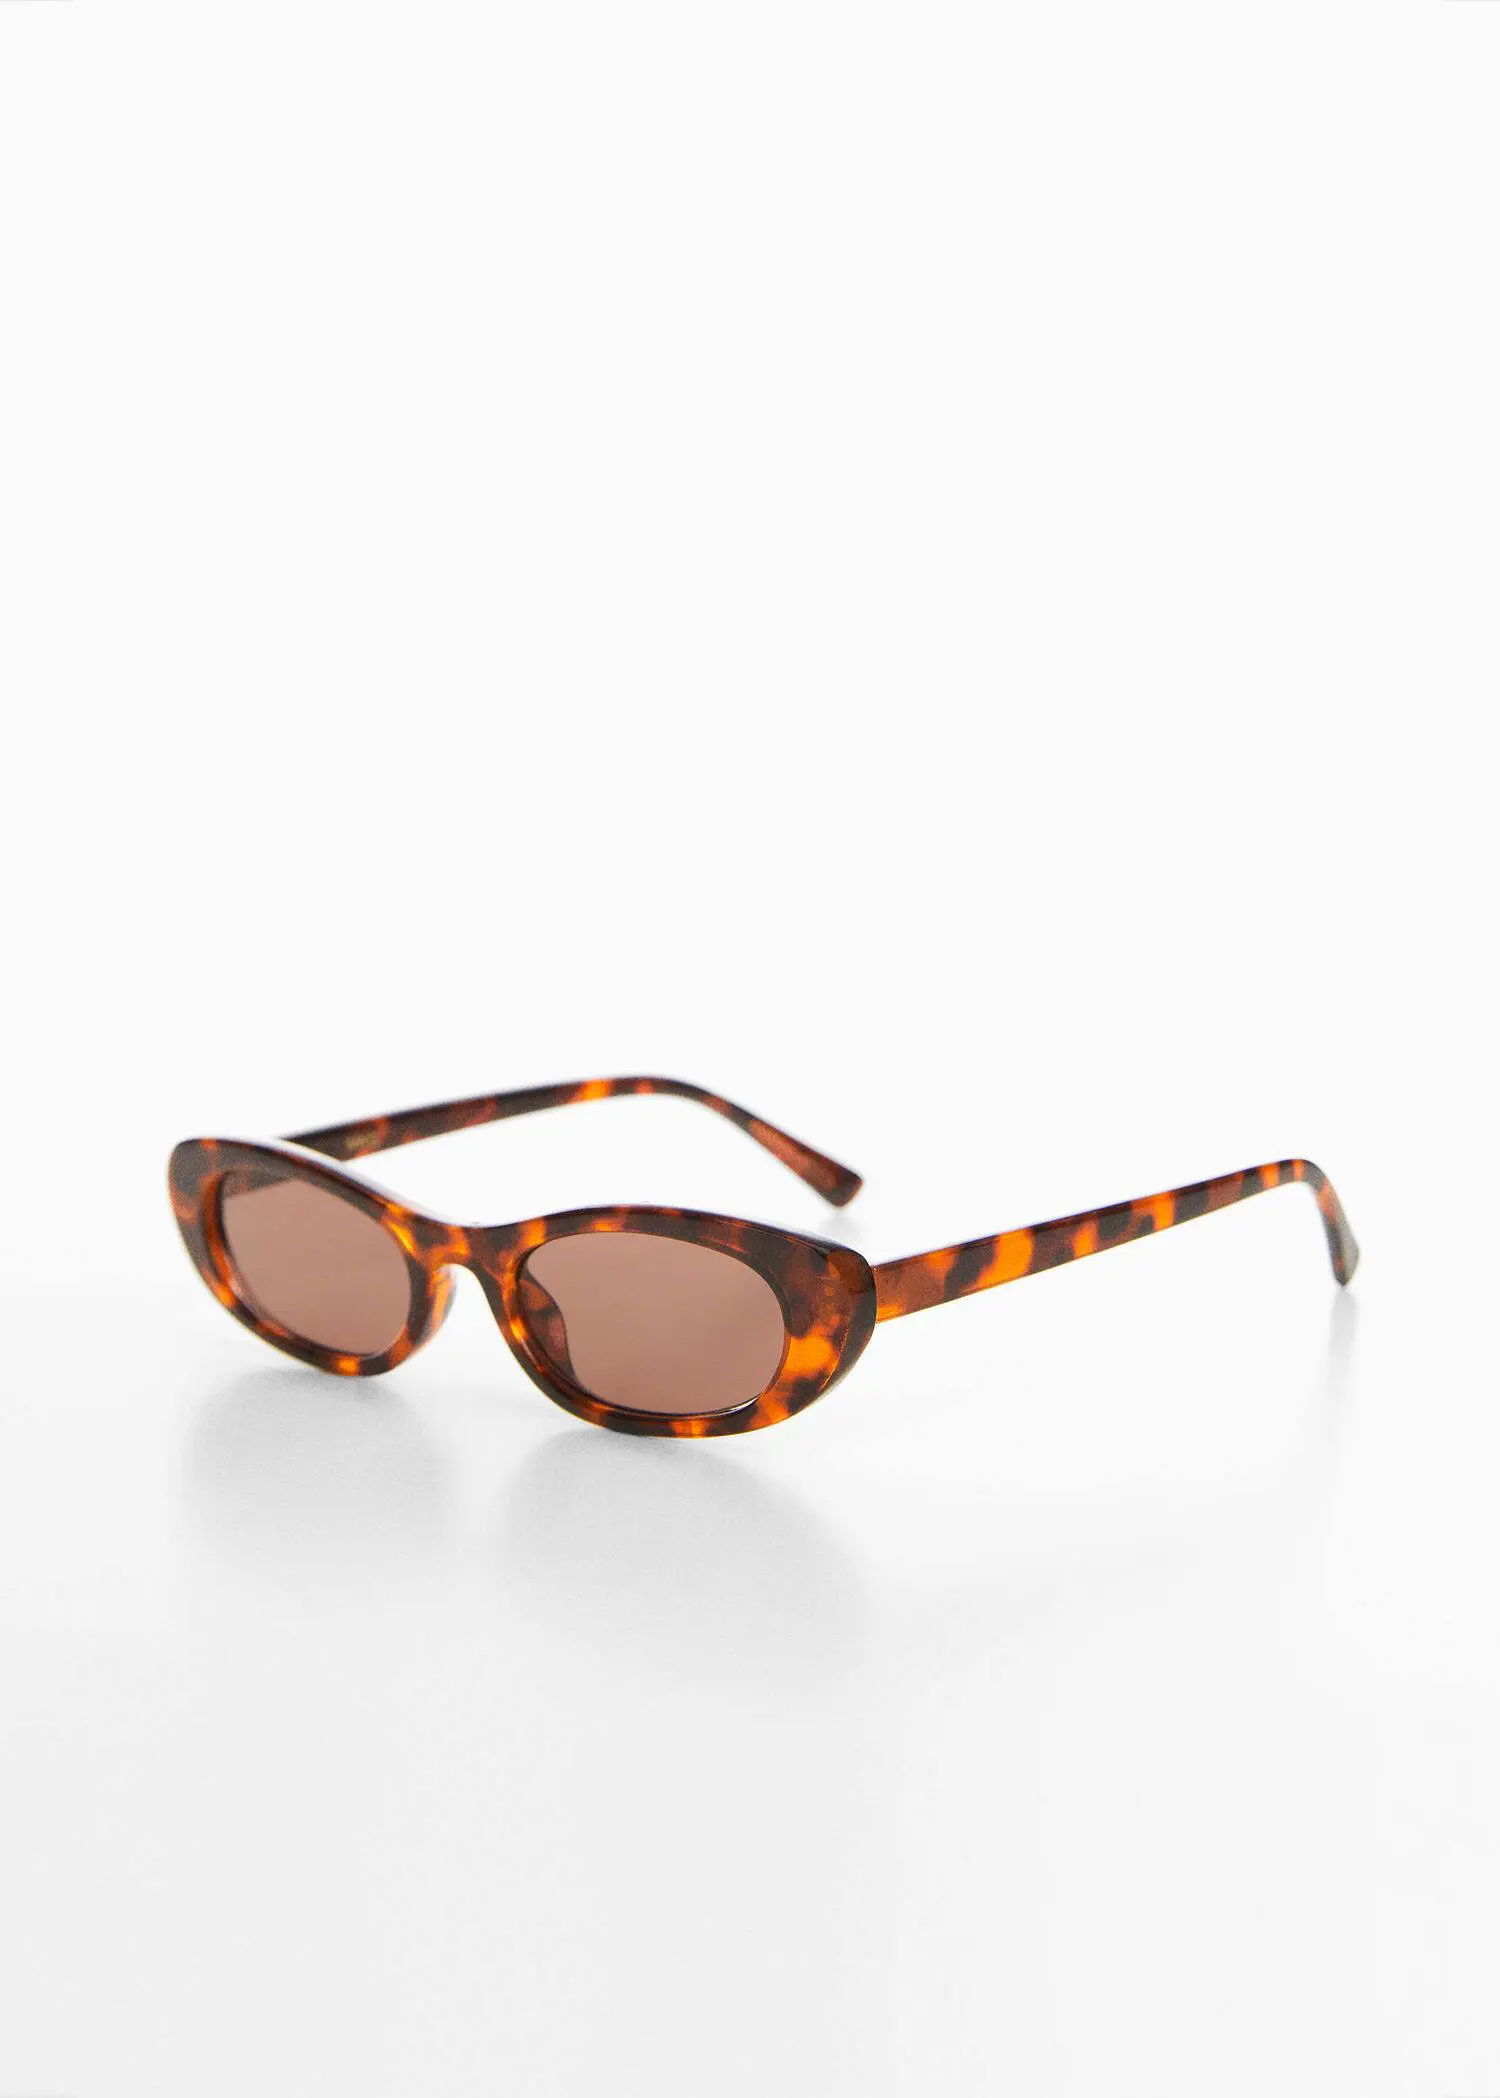 Mango Oval sunglasses. 3